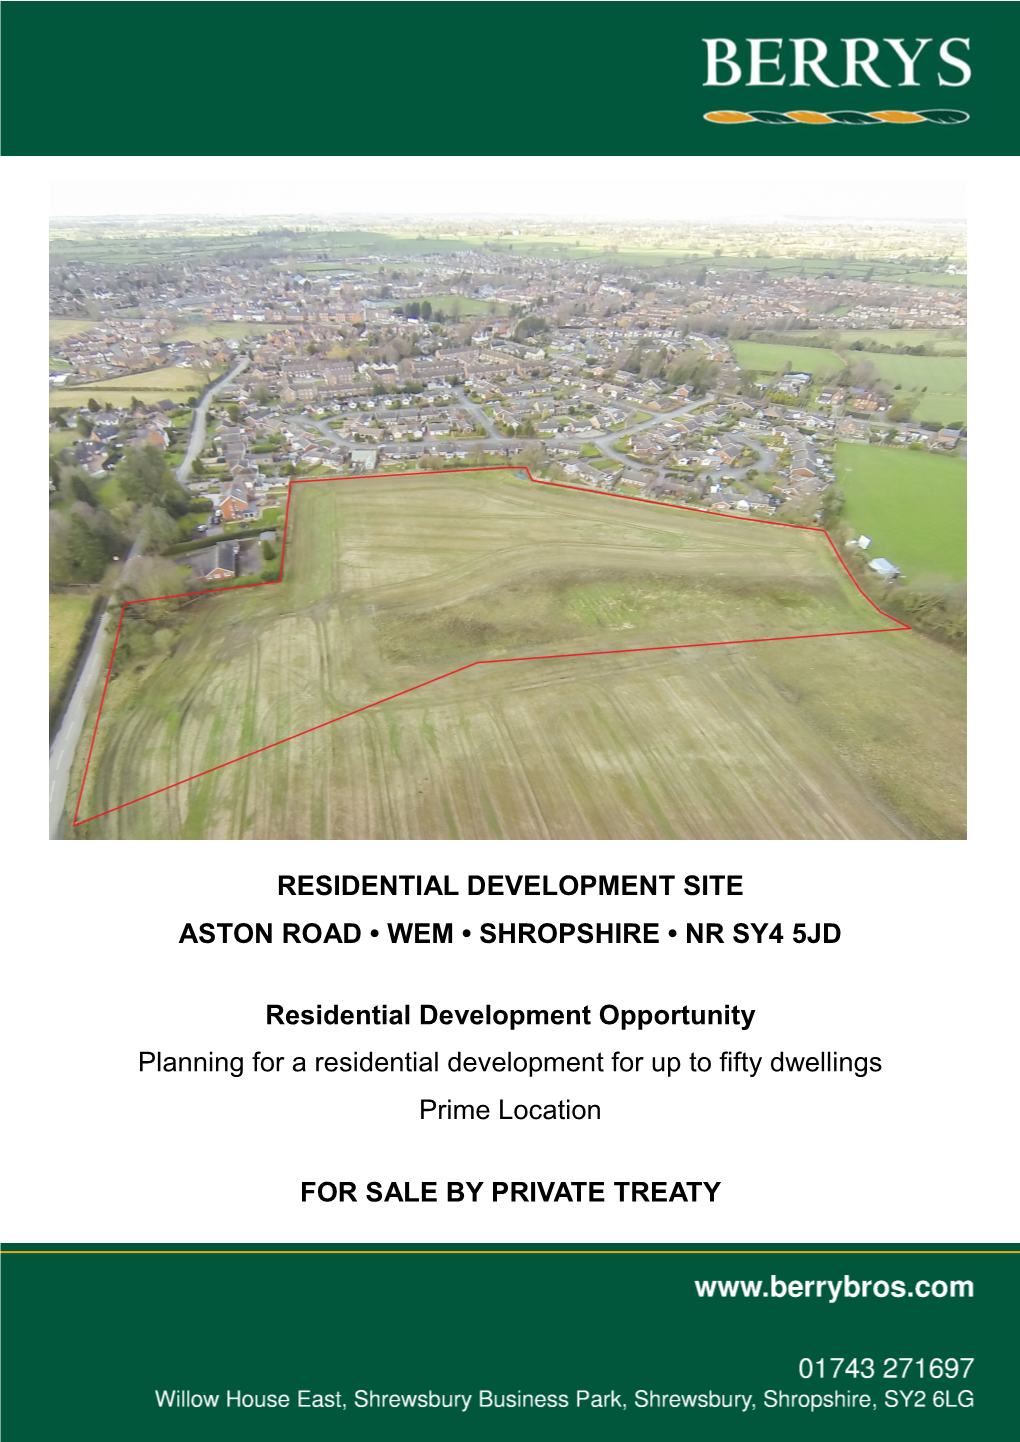 Residential Development Site Aston Road • Wem • Shropshire • Nr Sy4 5Jd